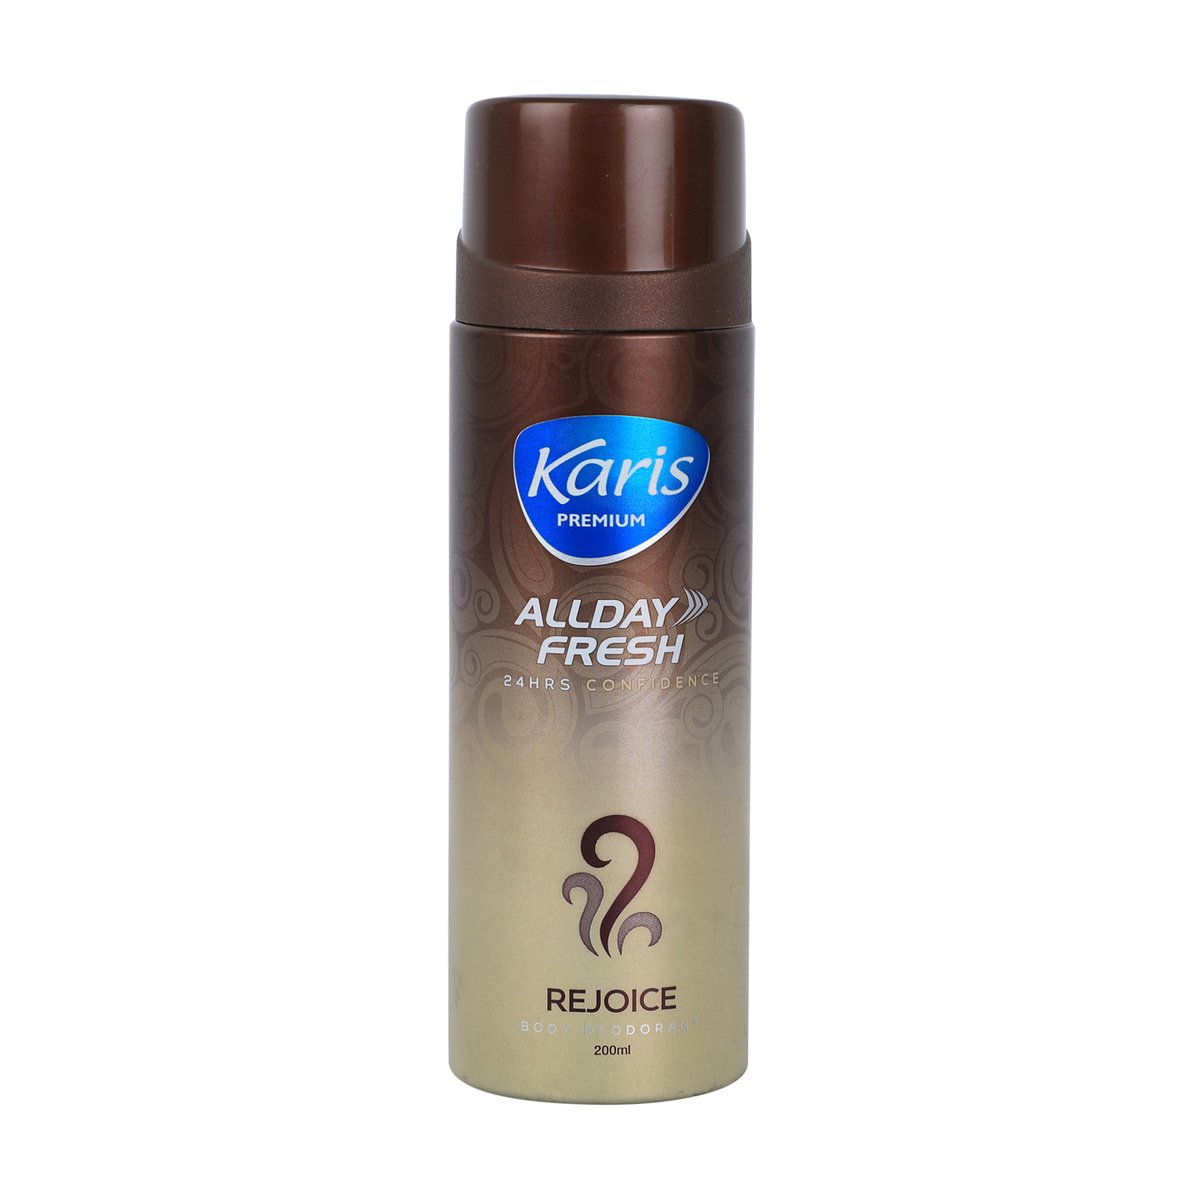 Karis Body Deodorant Spray All Day Fresh Rejoice For Women 200ml